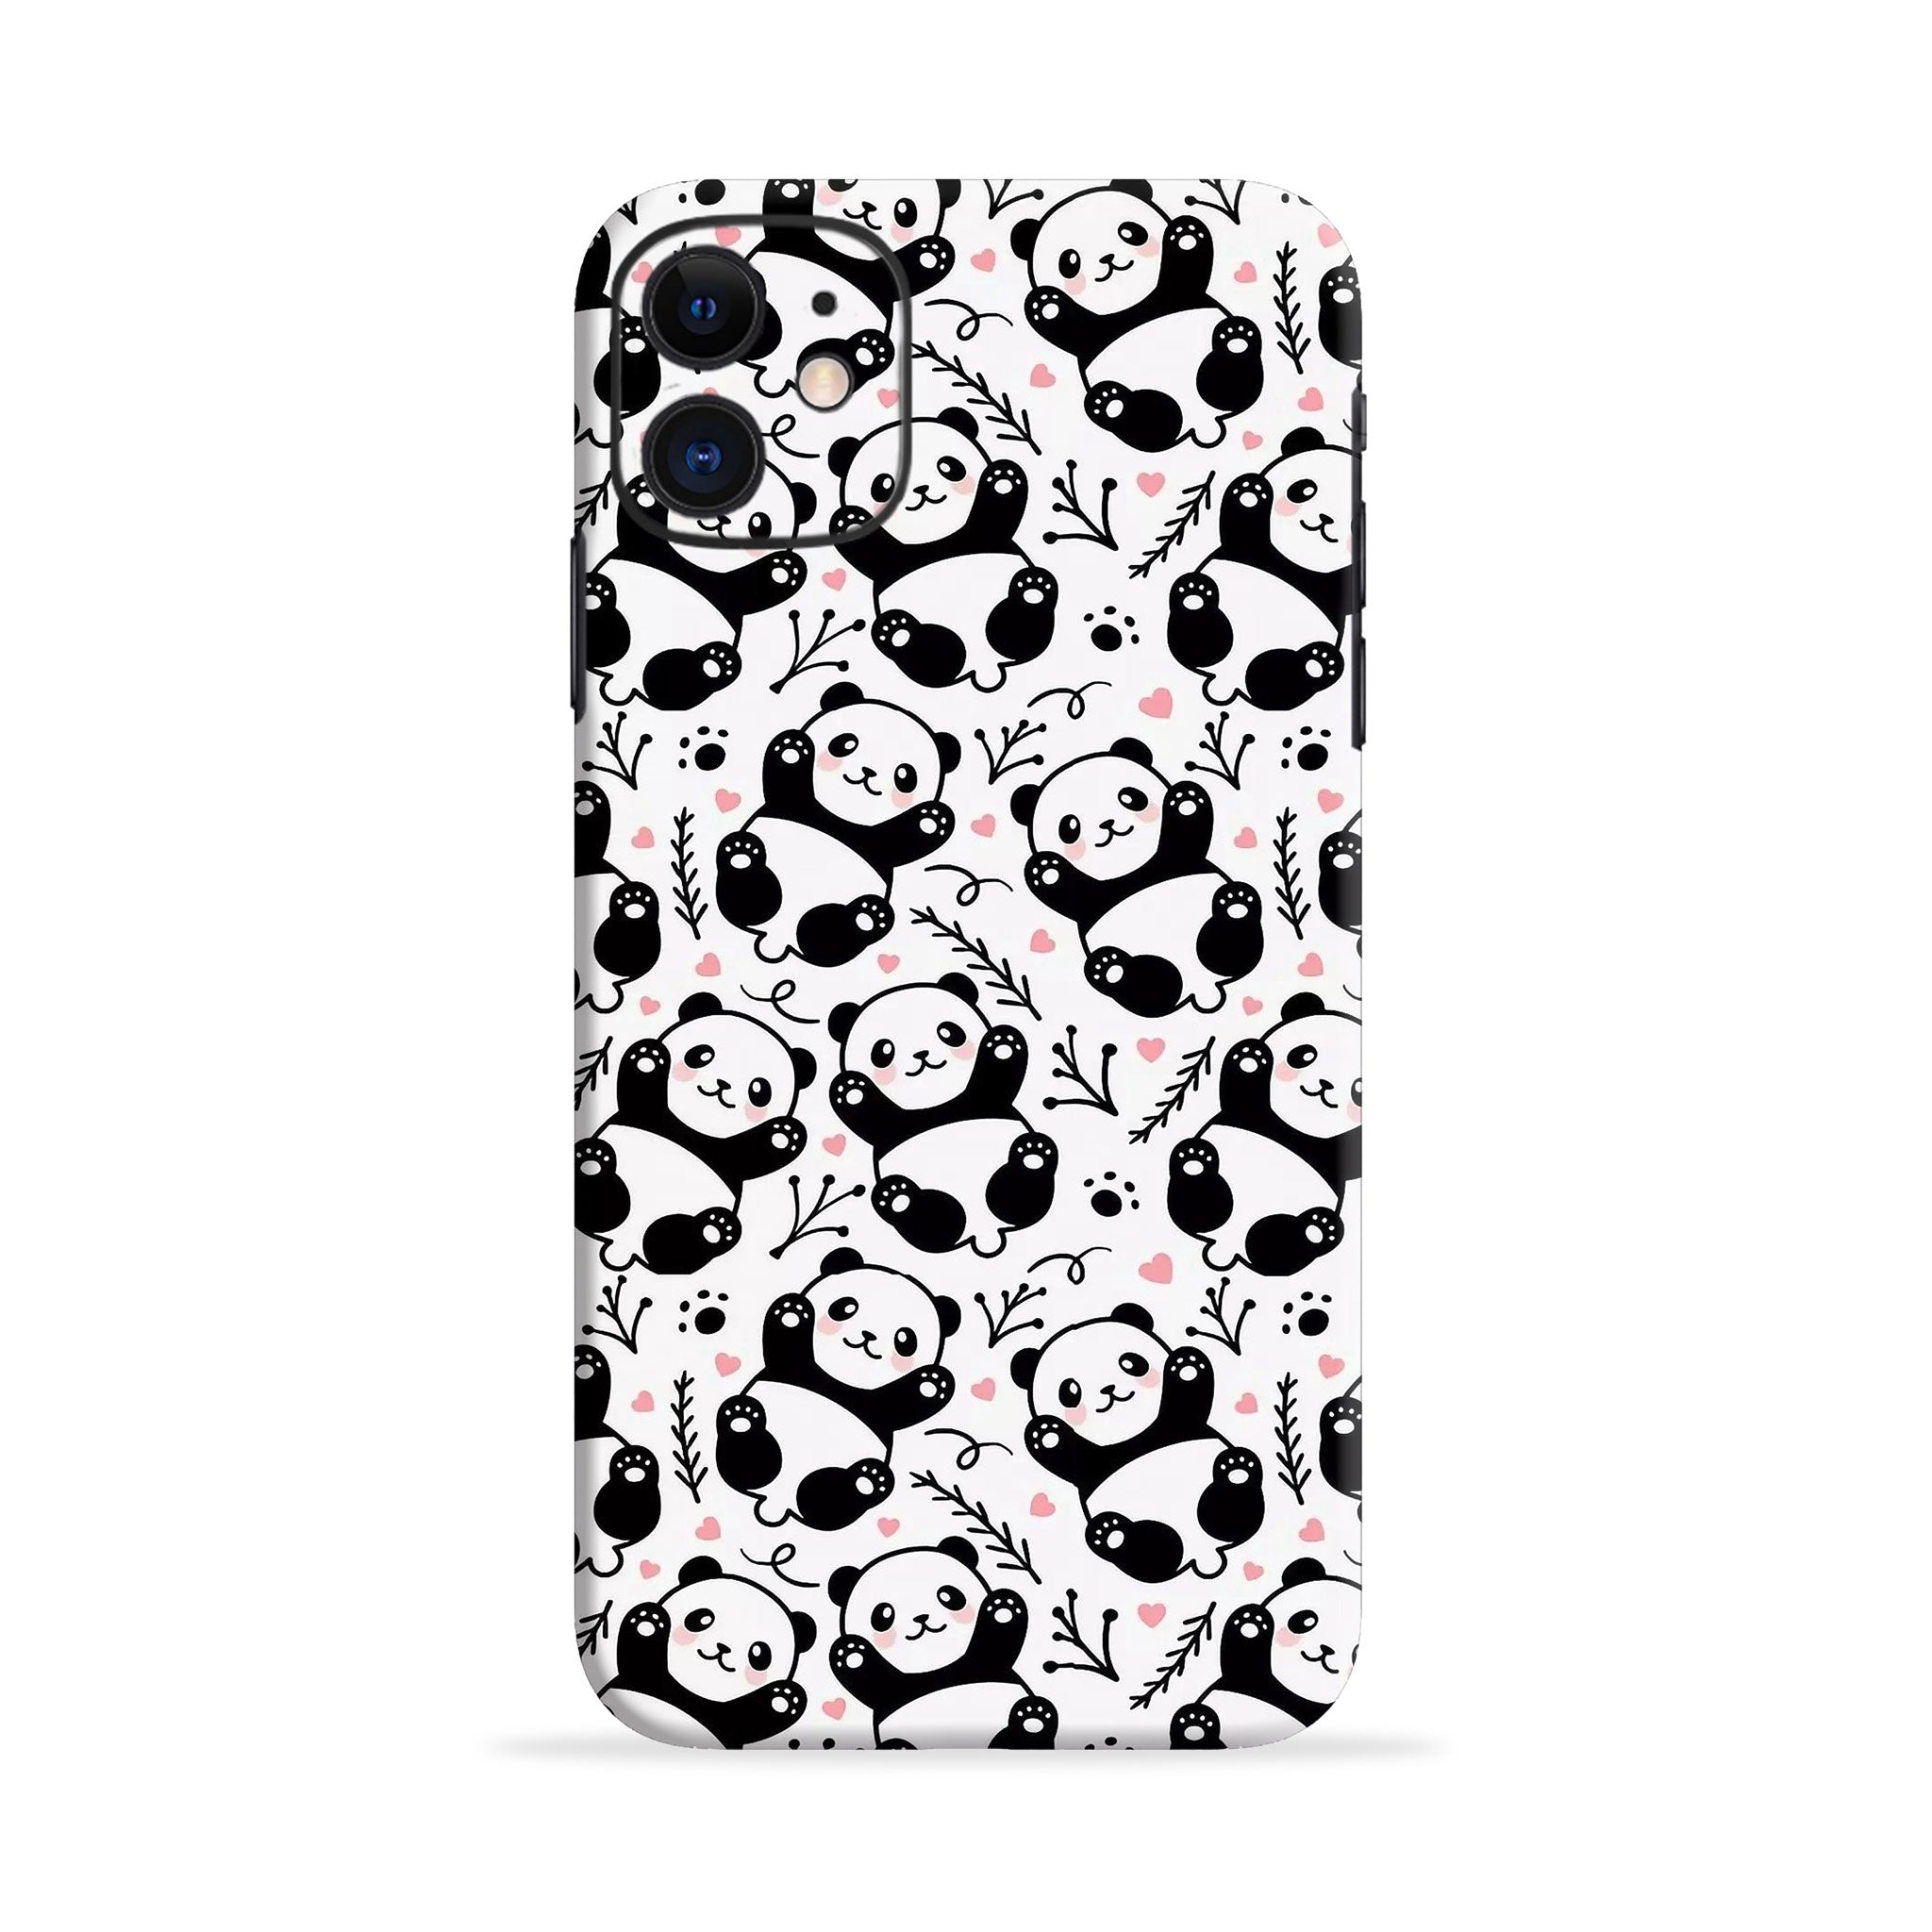 Cute Panda iPhone 5C Back Skin Wrap